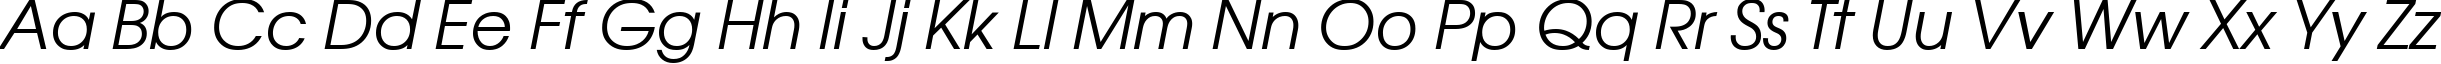 Пример написания английского алфавита шрифтом AvantGardeCTT Italic